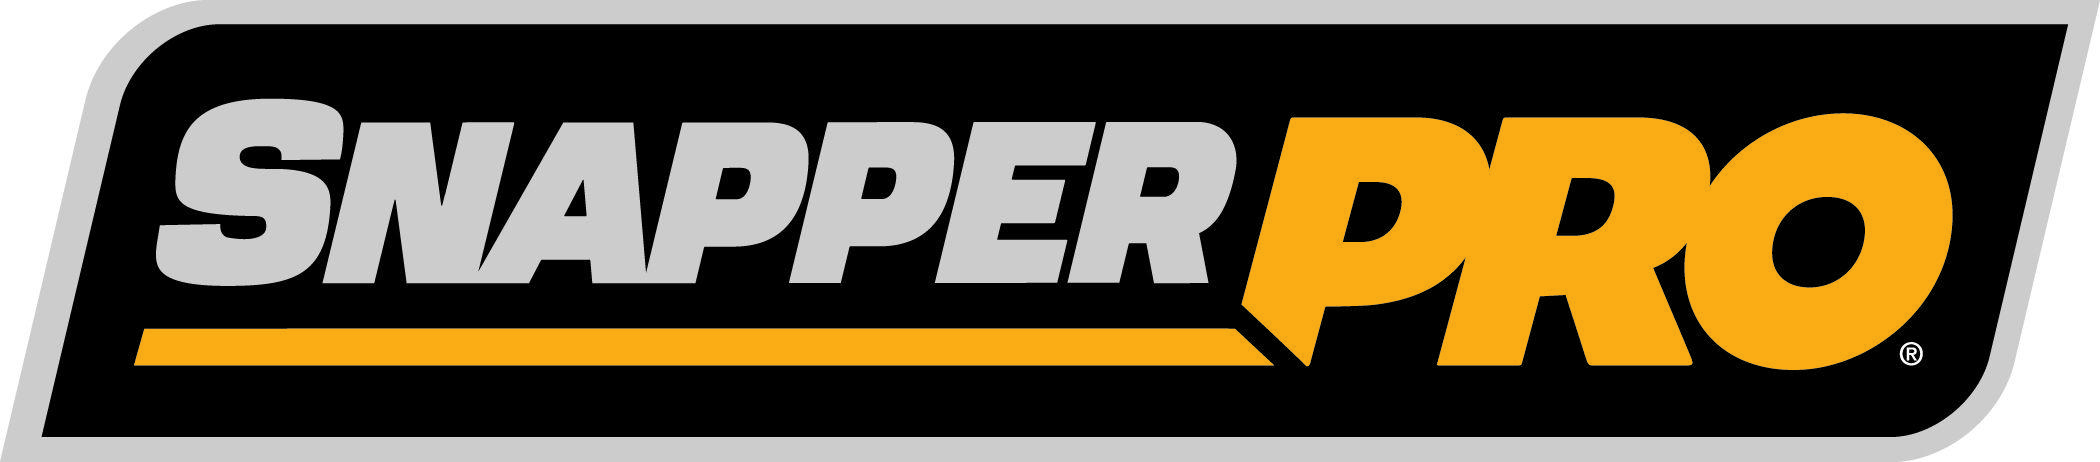 Pro Logo - Snapper Pro JPEG Logos